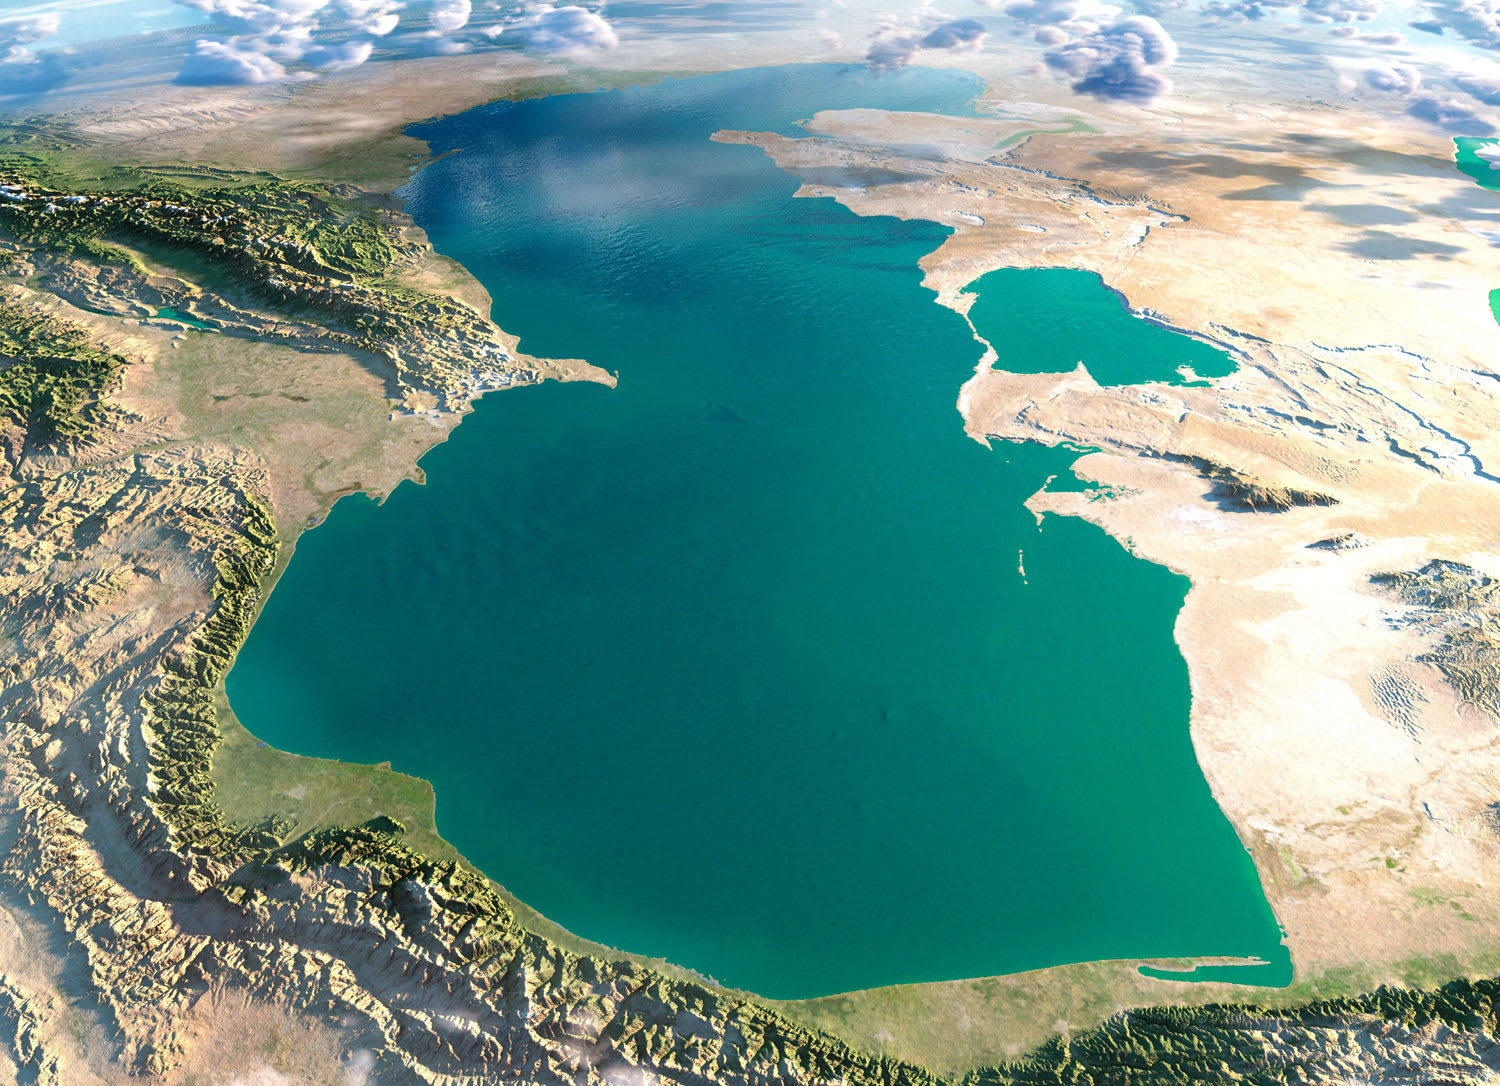 Caspian Sea - World's Largest Lake